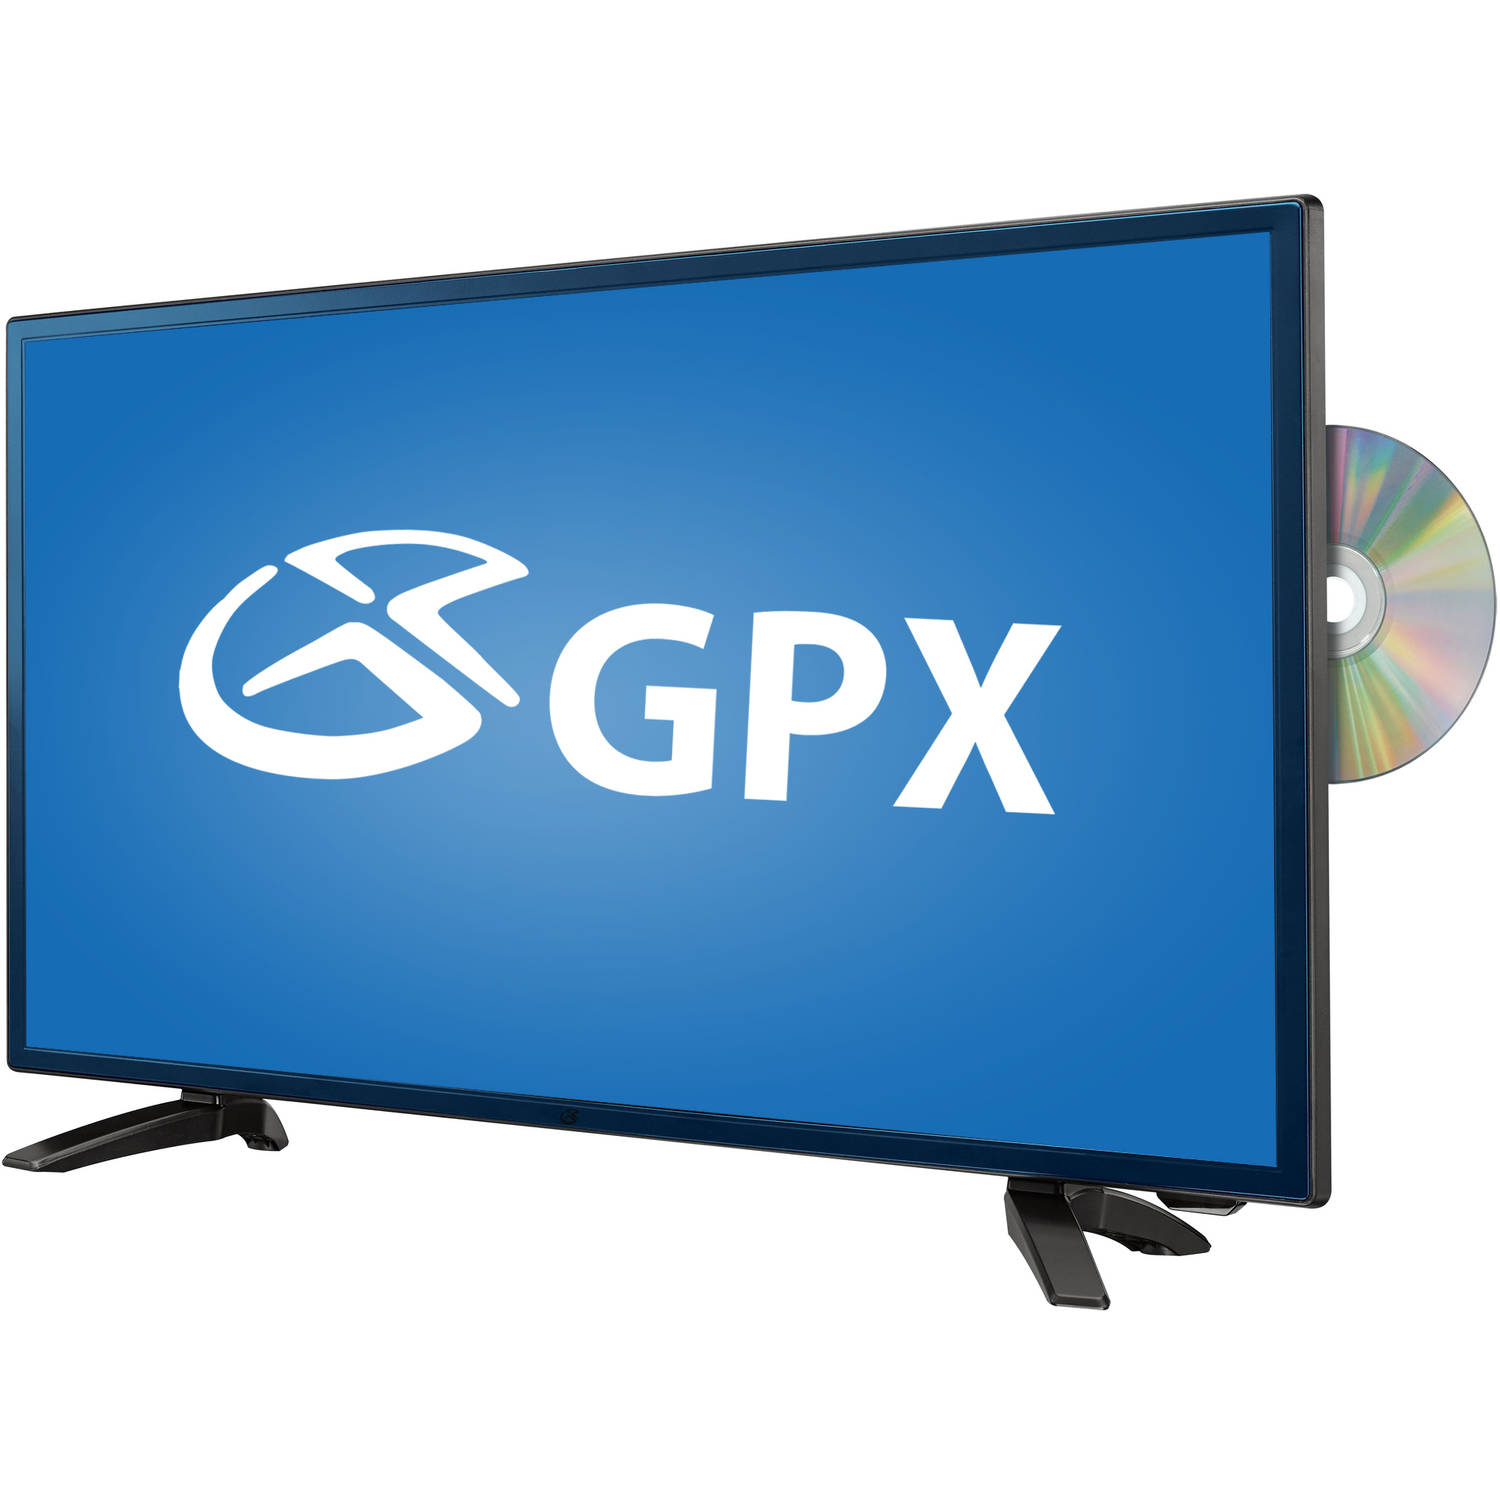 gpx 24 1080p lcd tv/dvd combo